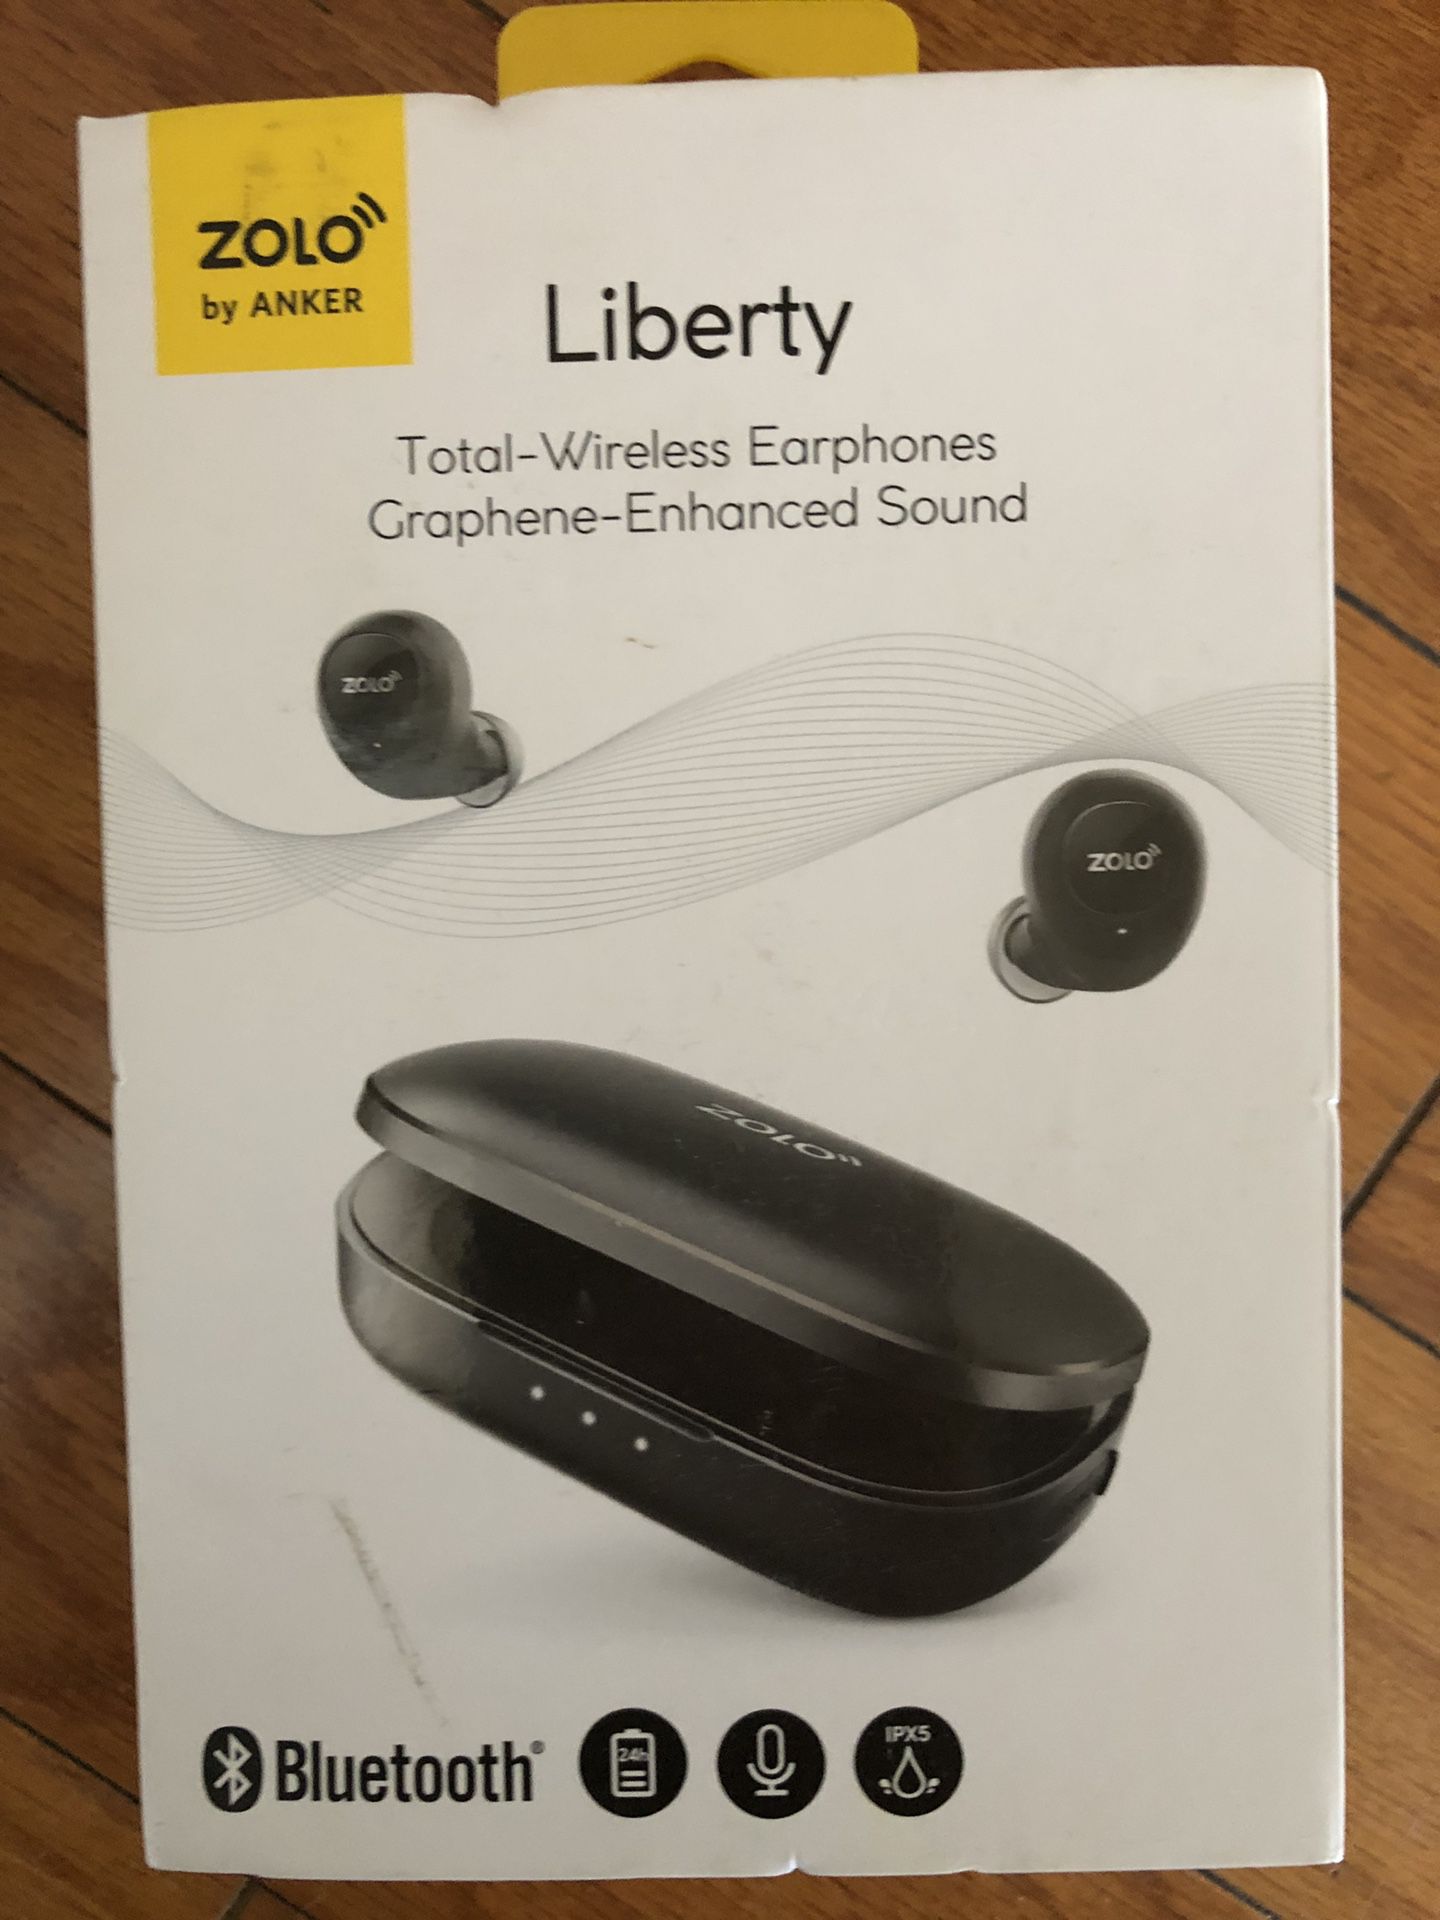 Zolo Liberty Total-Wireless Earphones, Bluetooth Earbuds